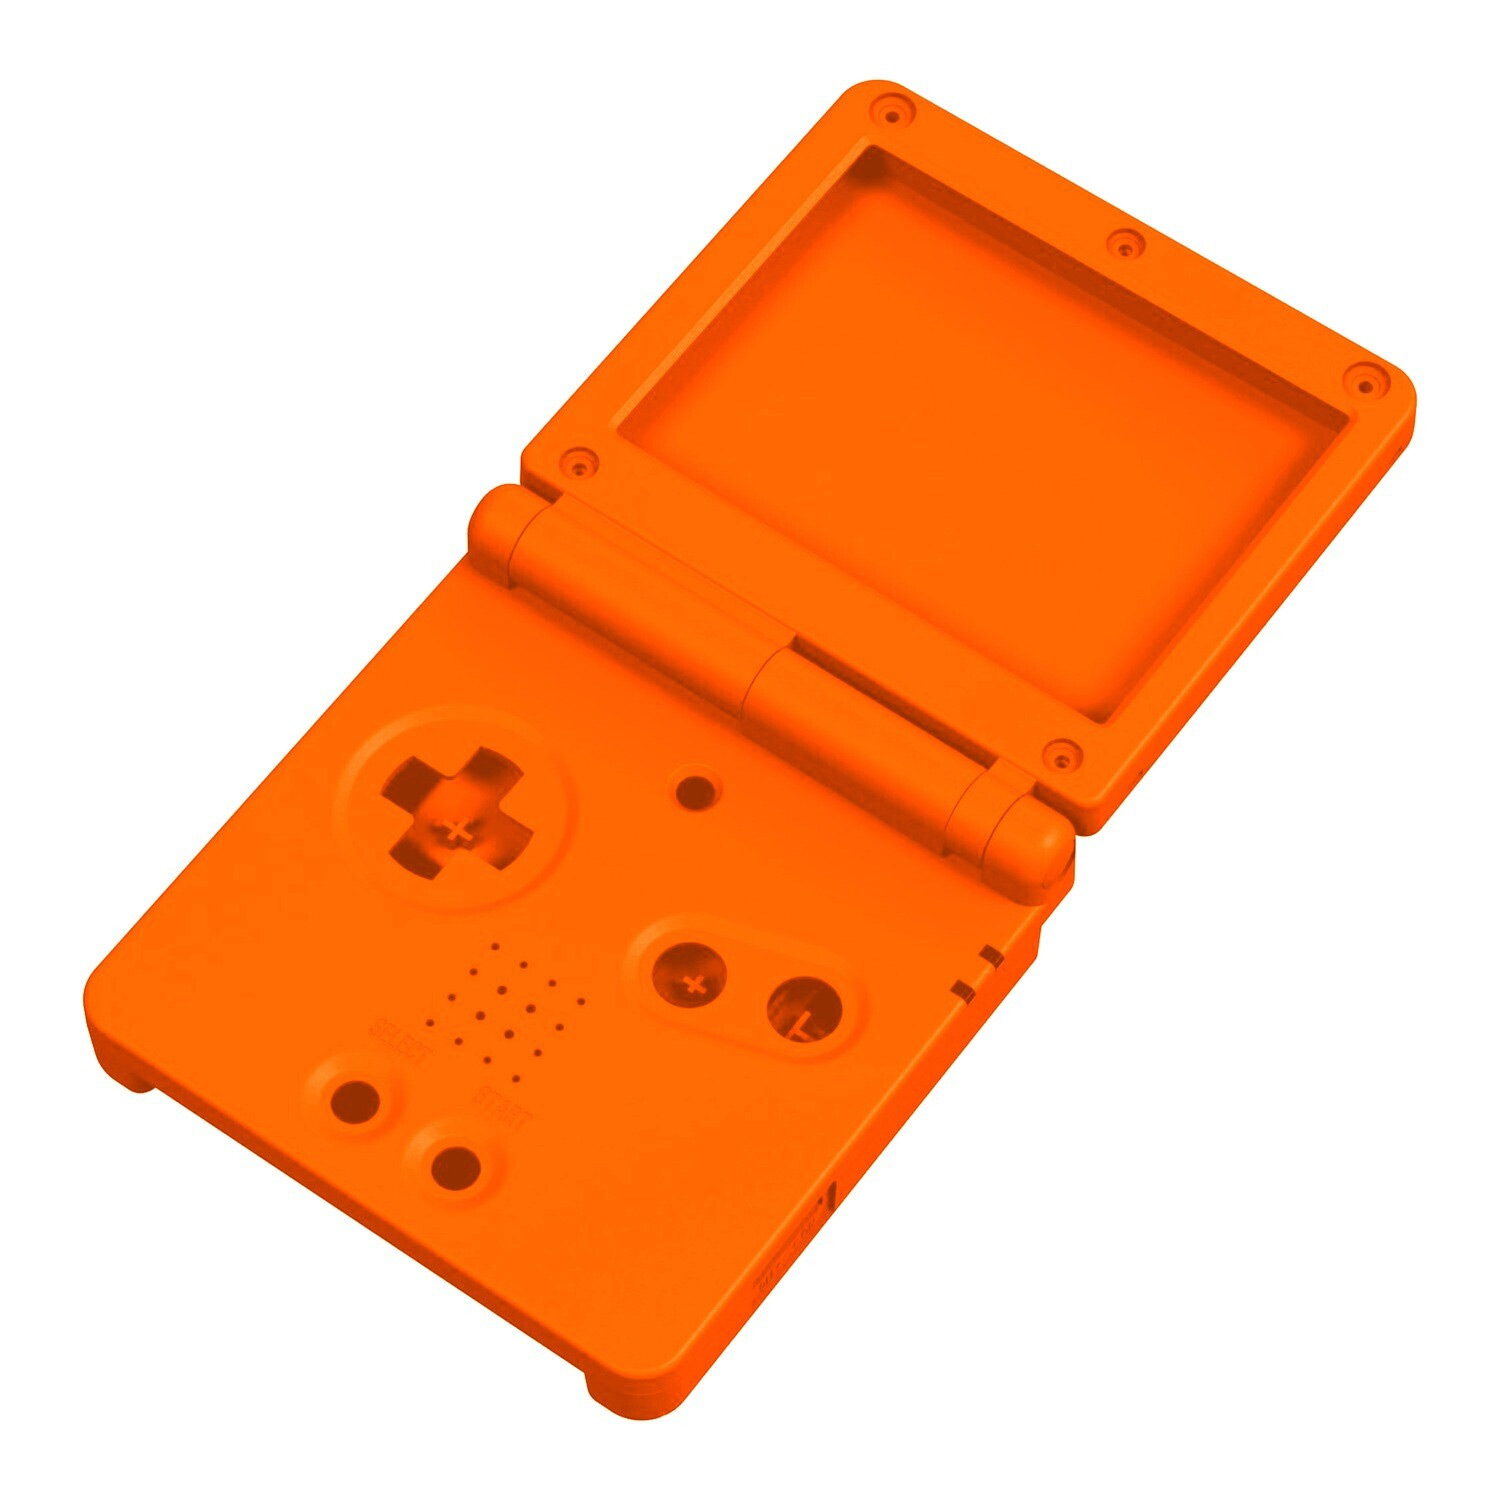 Game Boy Advance SP Etui (Oranje mat)